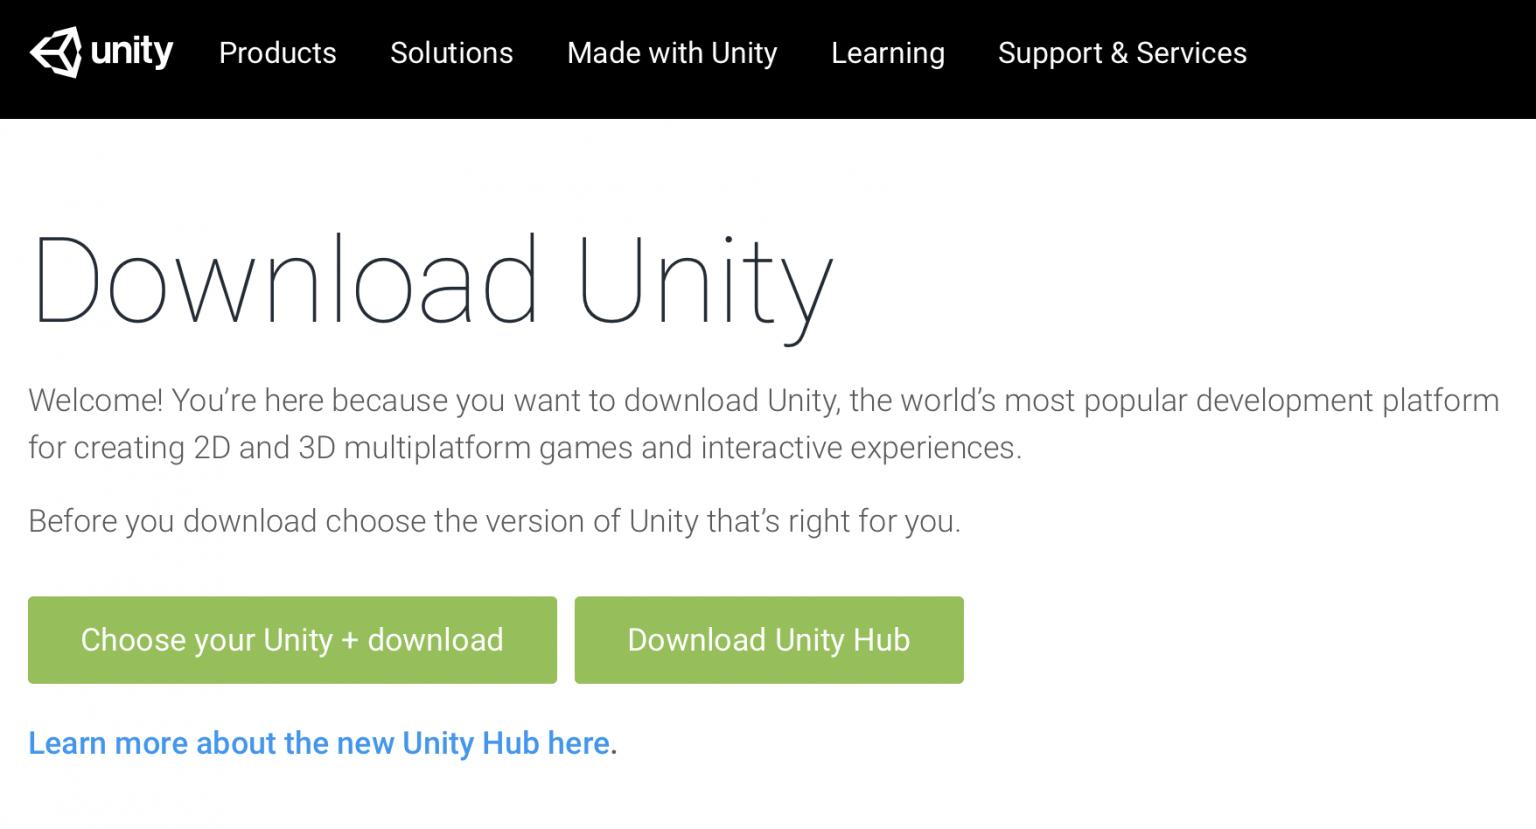 unity hub 3.0